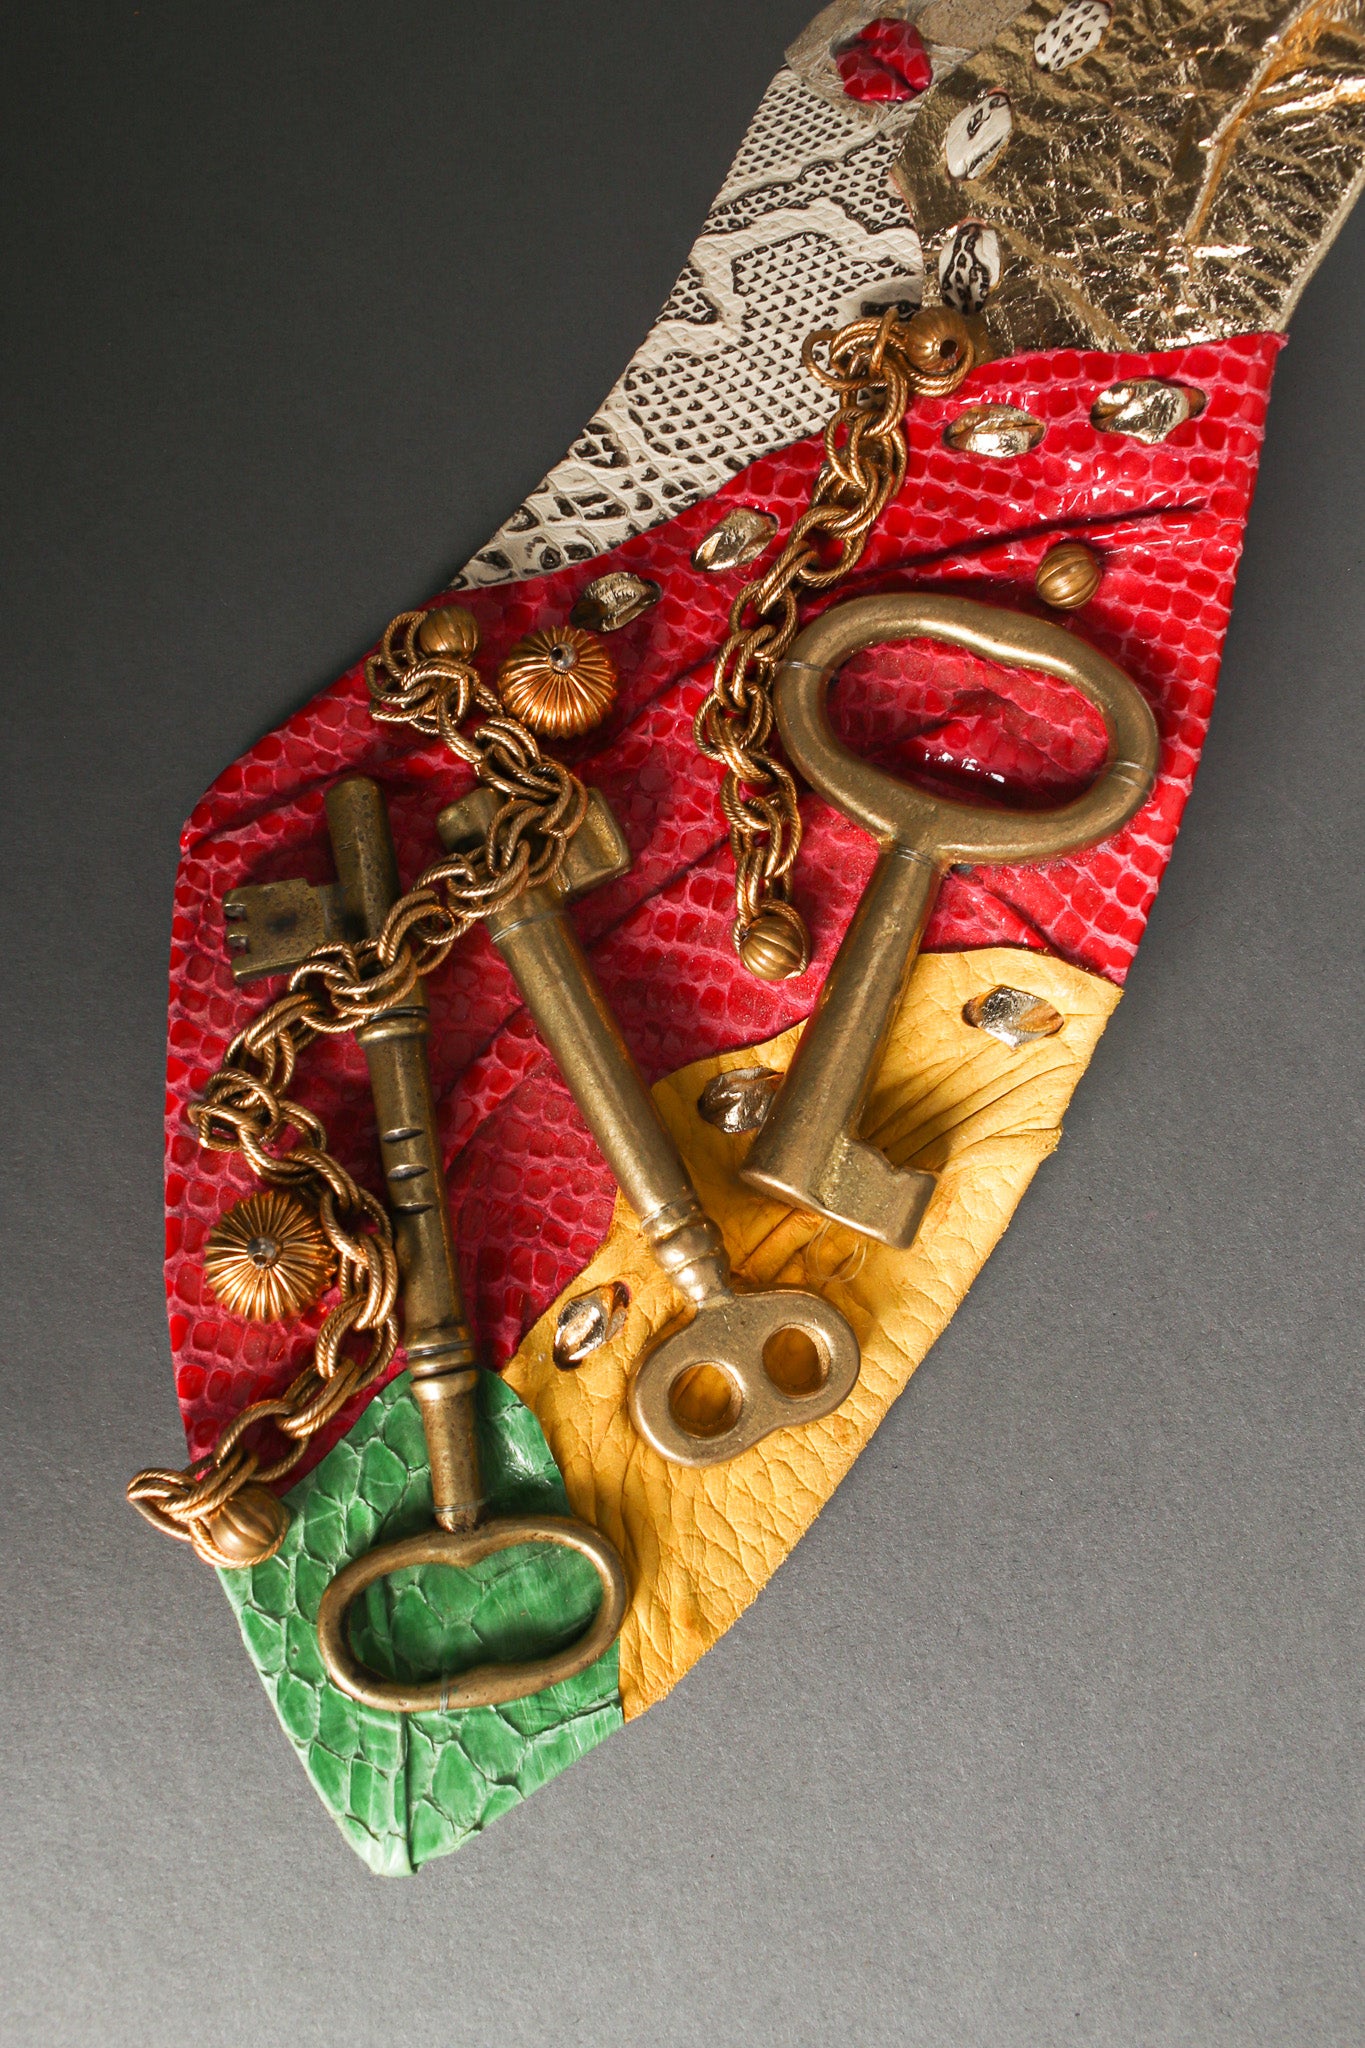 leather belt with with gold keys by Paula K keys close @recessla